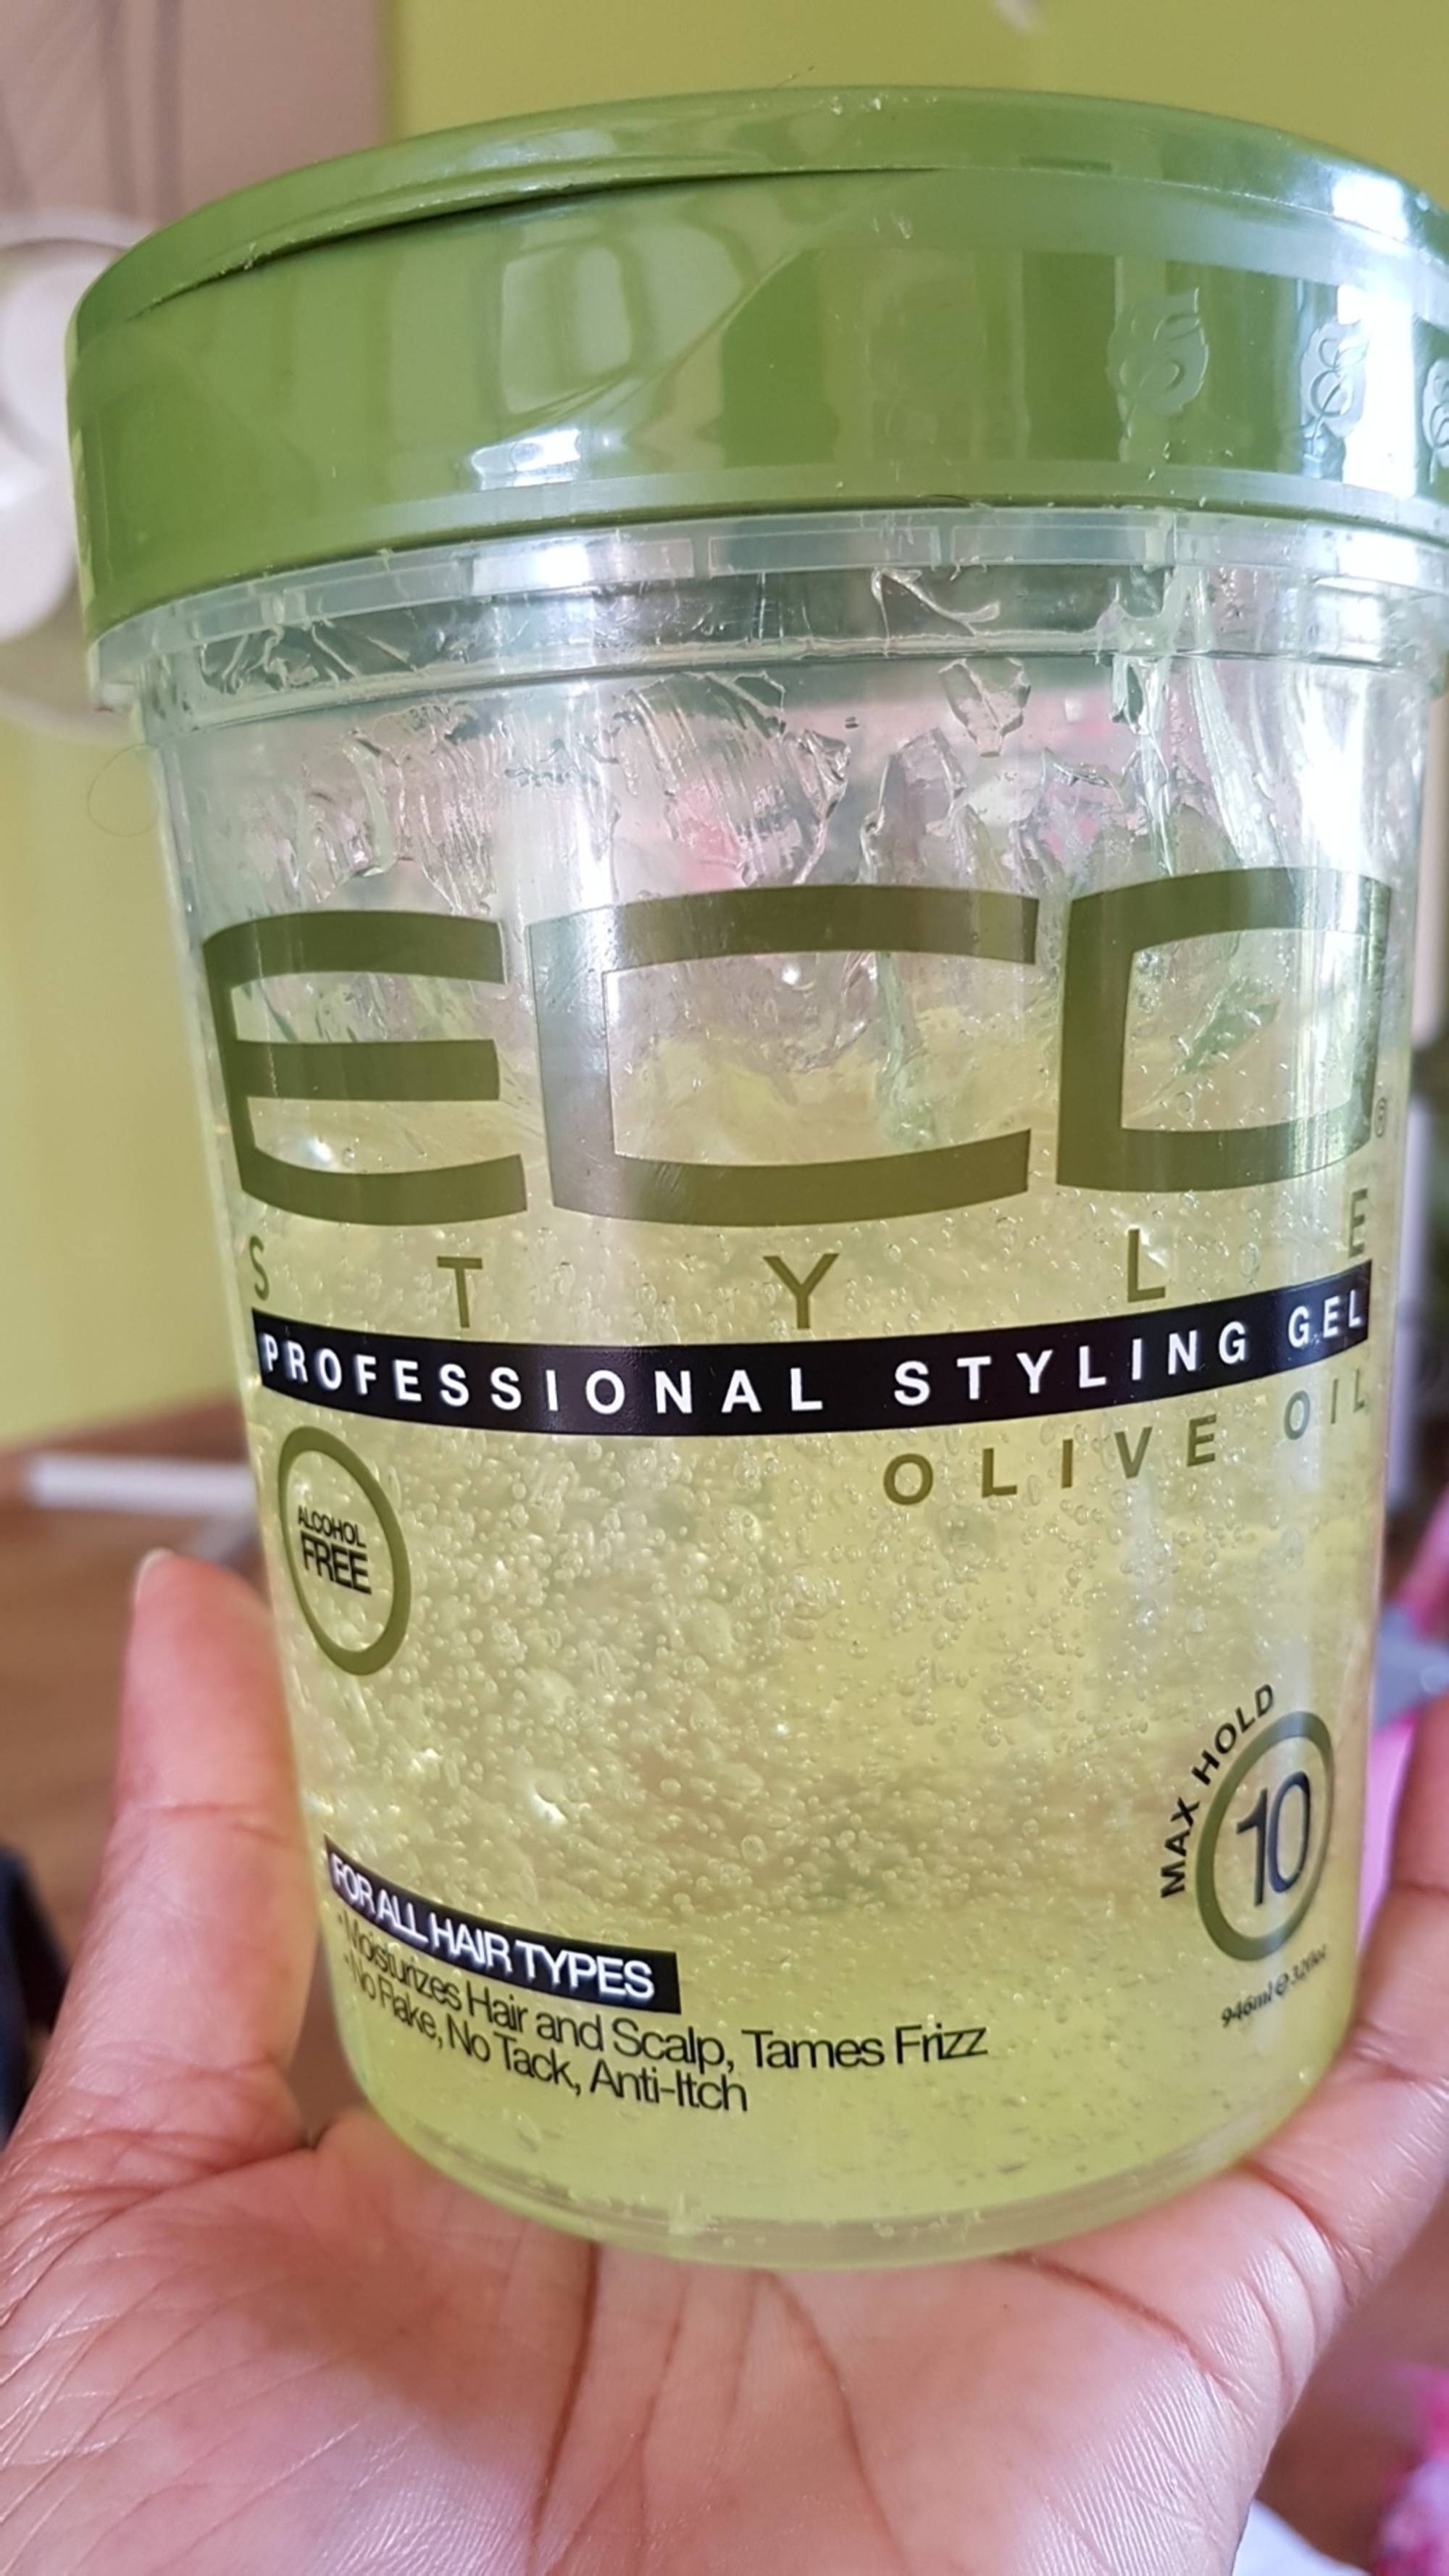 ECO STYLE - Ecostyler - Olive oil styling gel